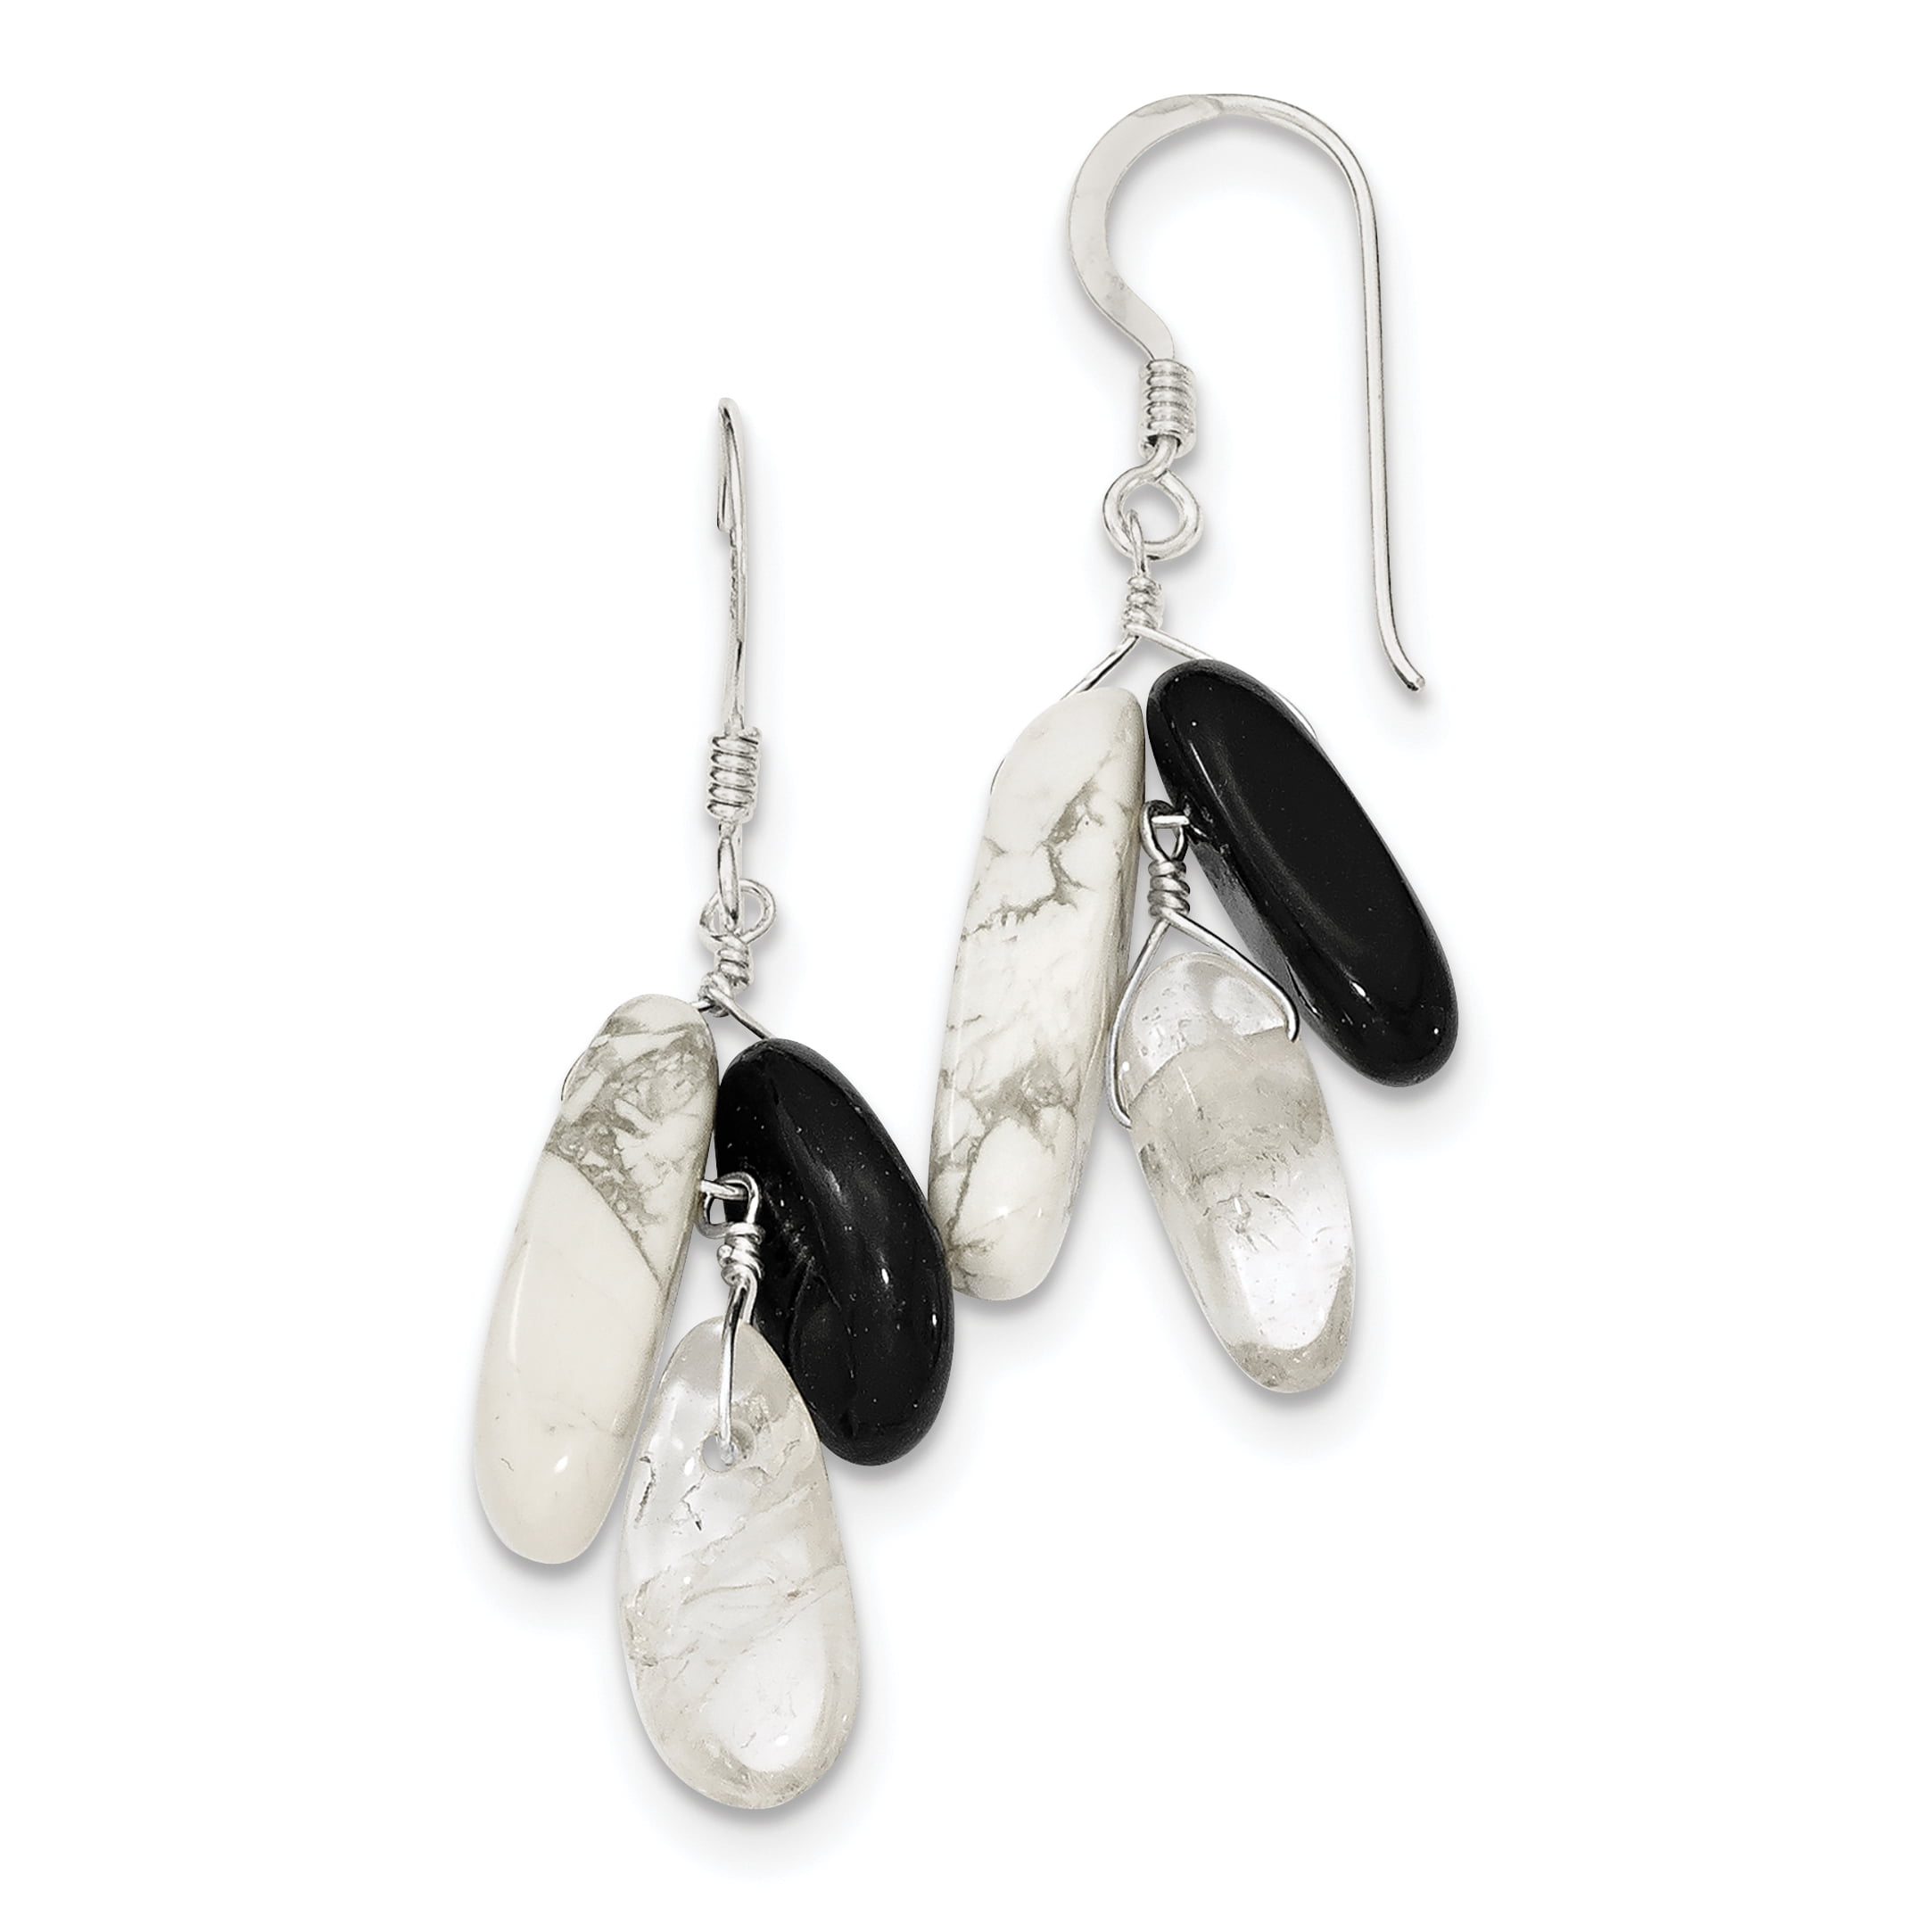 Howlite earrings sterling silver natural chip gemstone